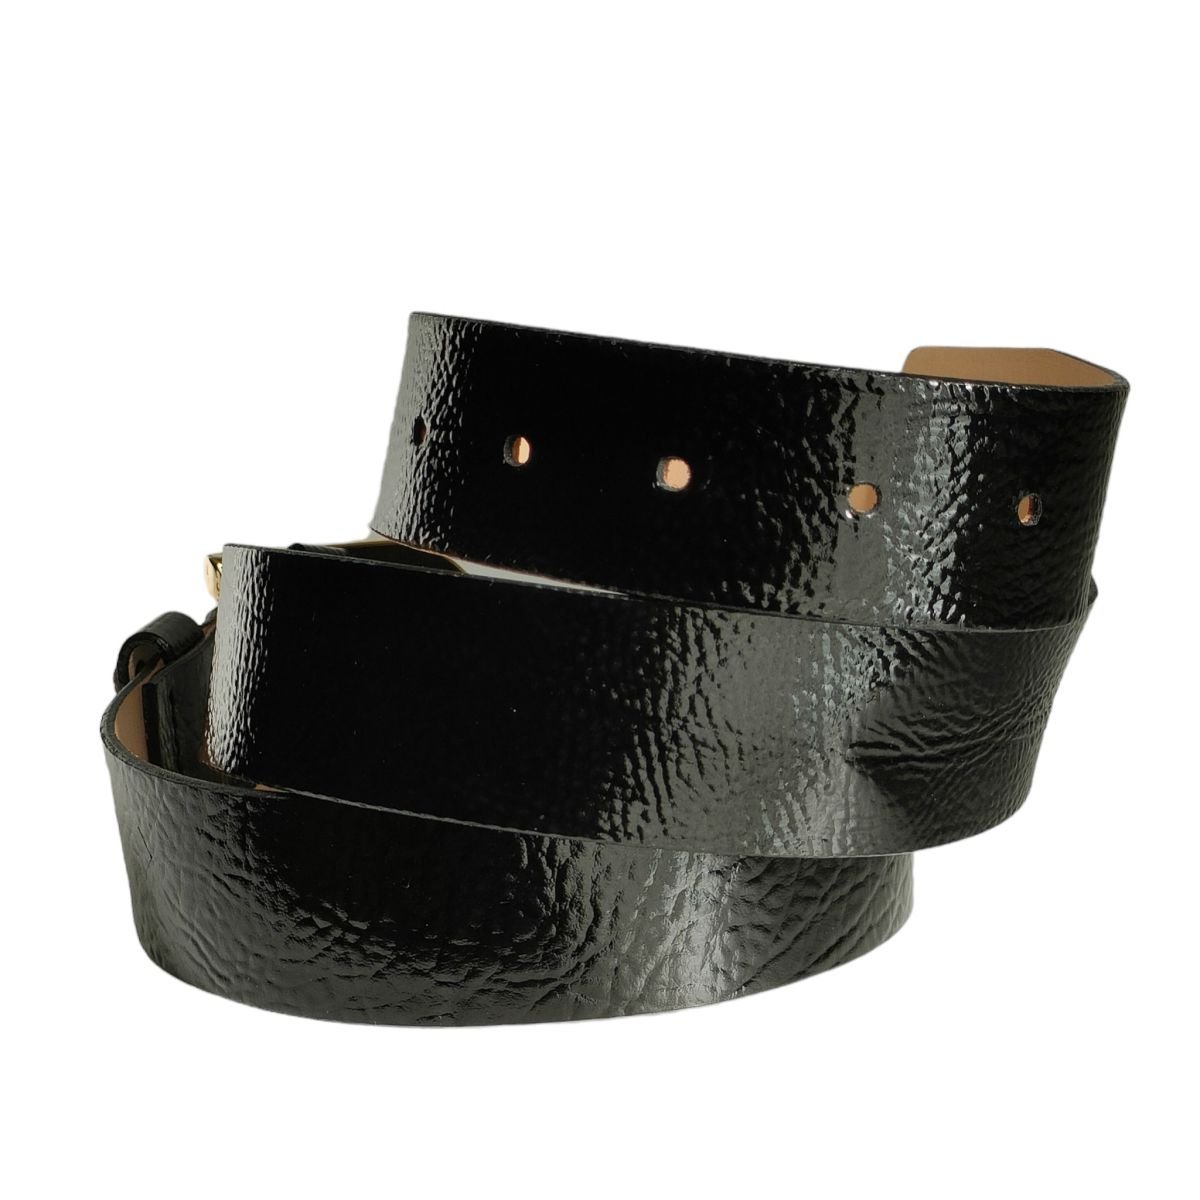  beautiful goods MAX MARA Max Mara enamel leather pin buckle belt M black J0102